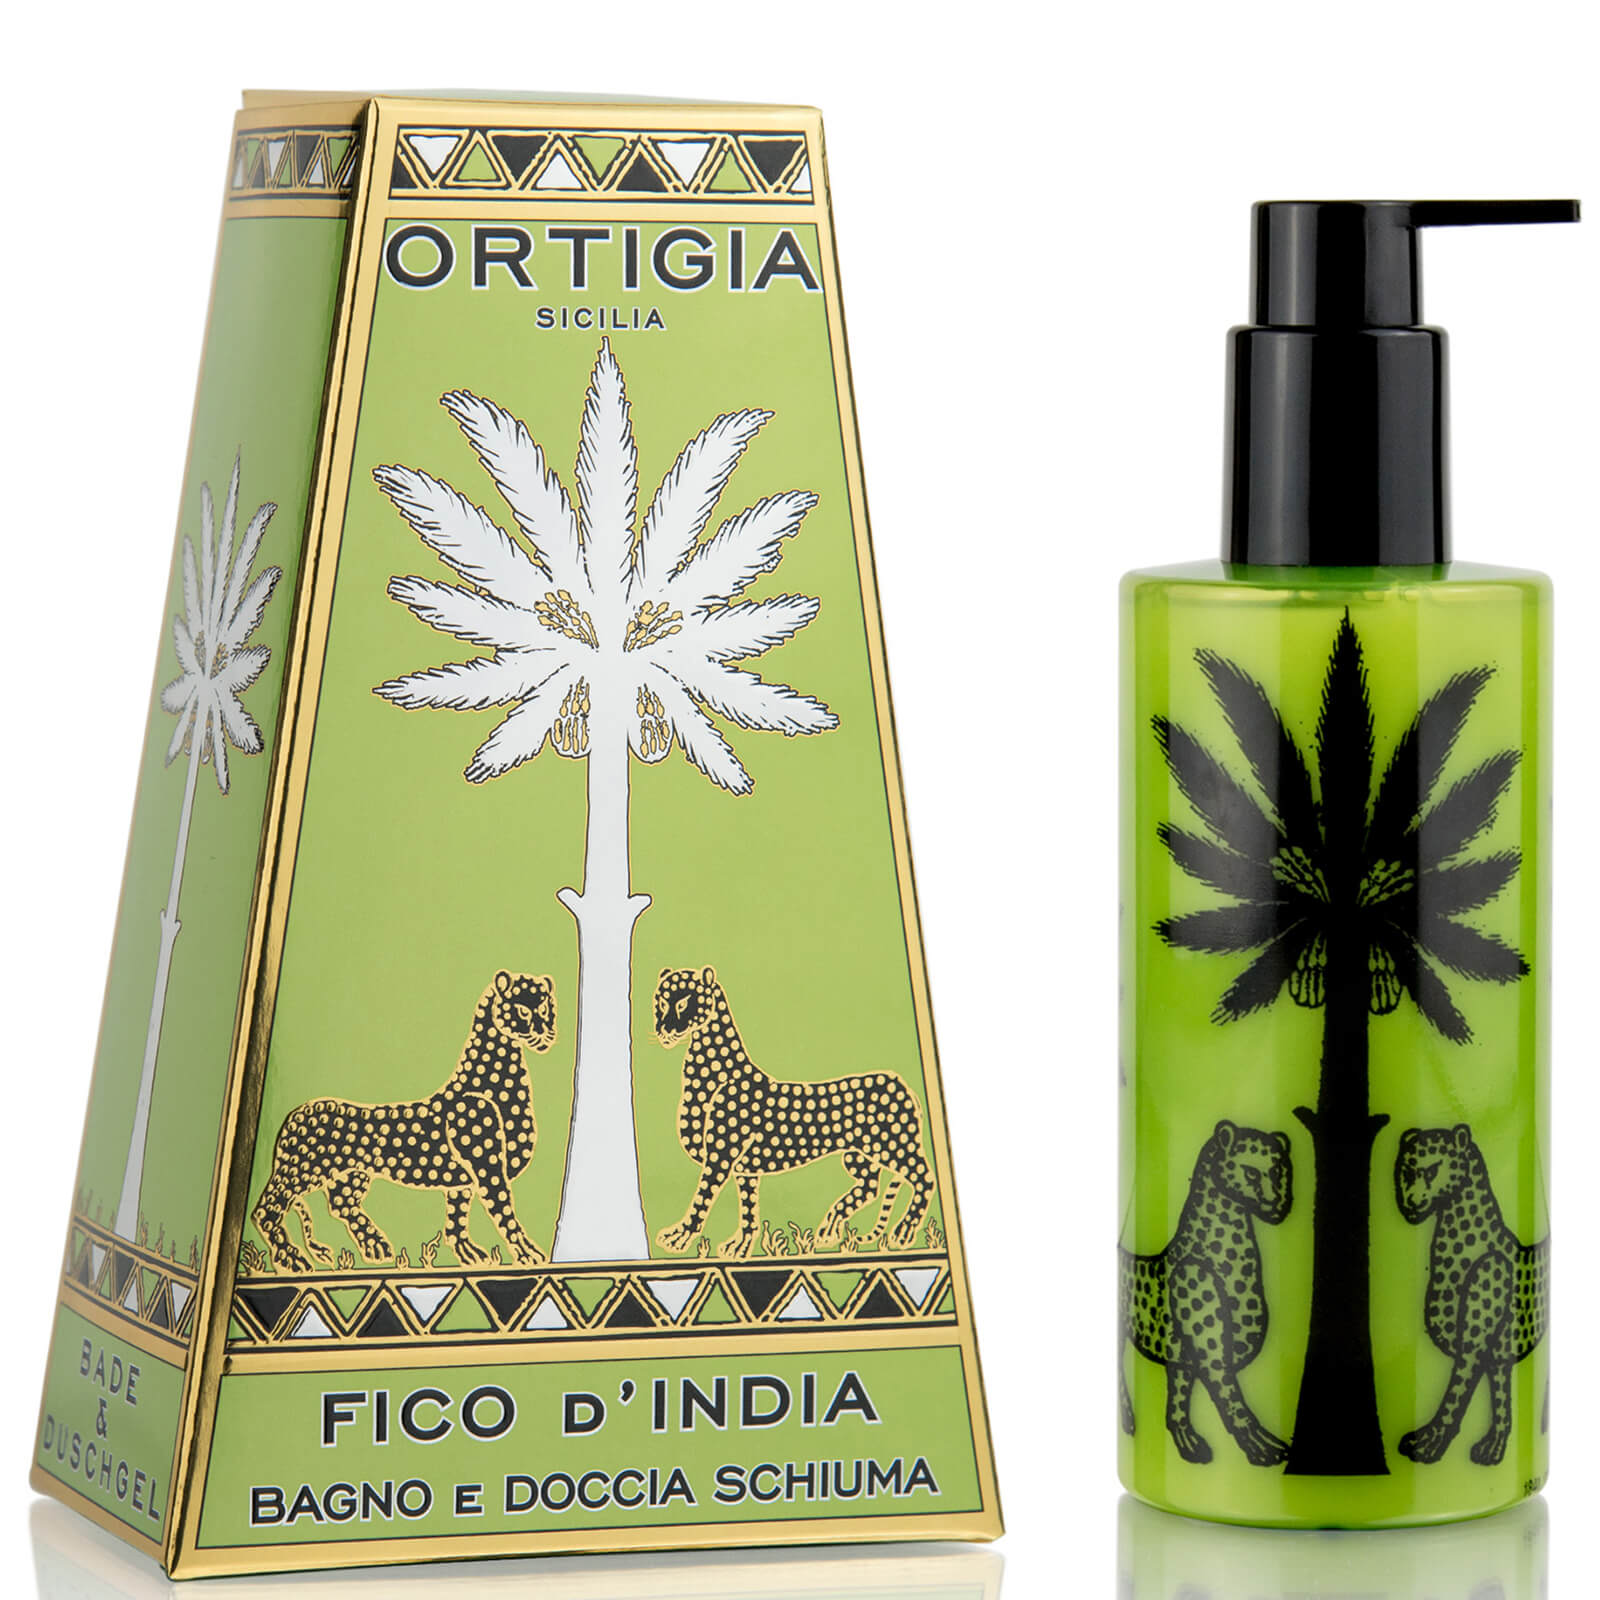 Gel de ducha Fico d'India de Ortigia (250 ml)